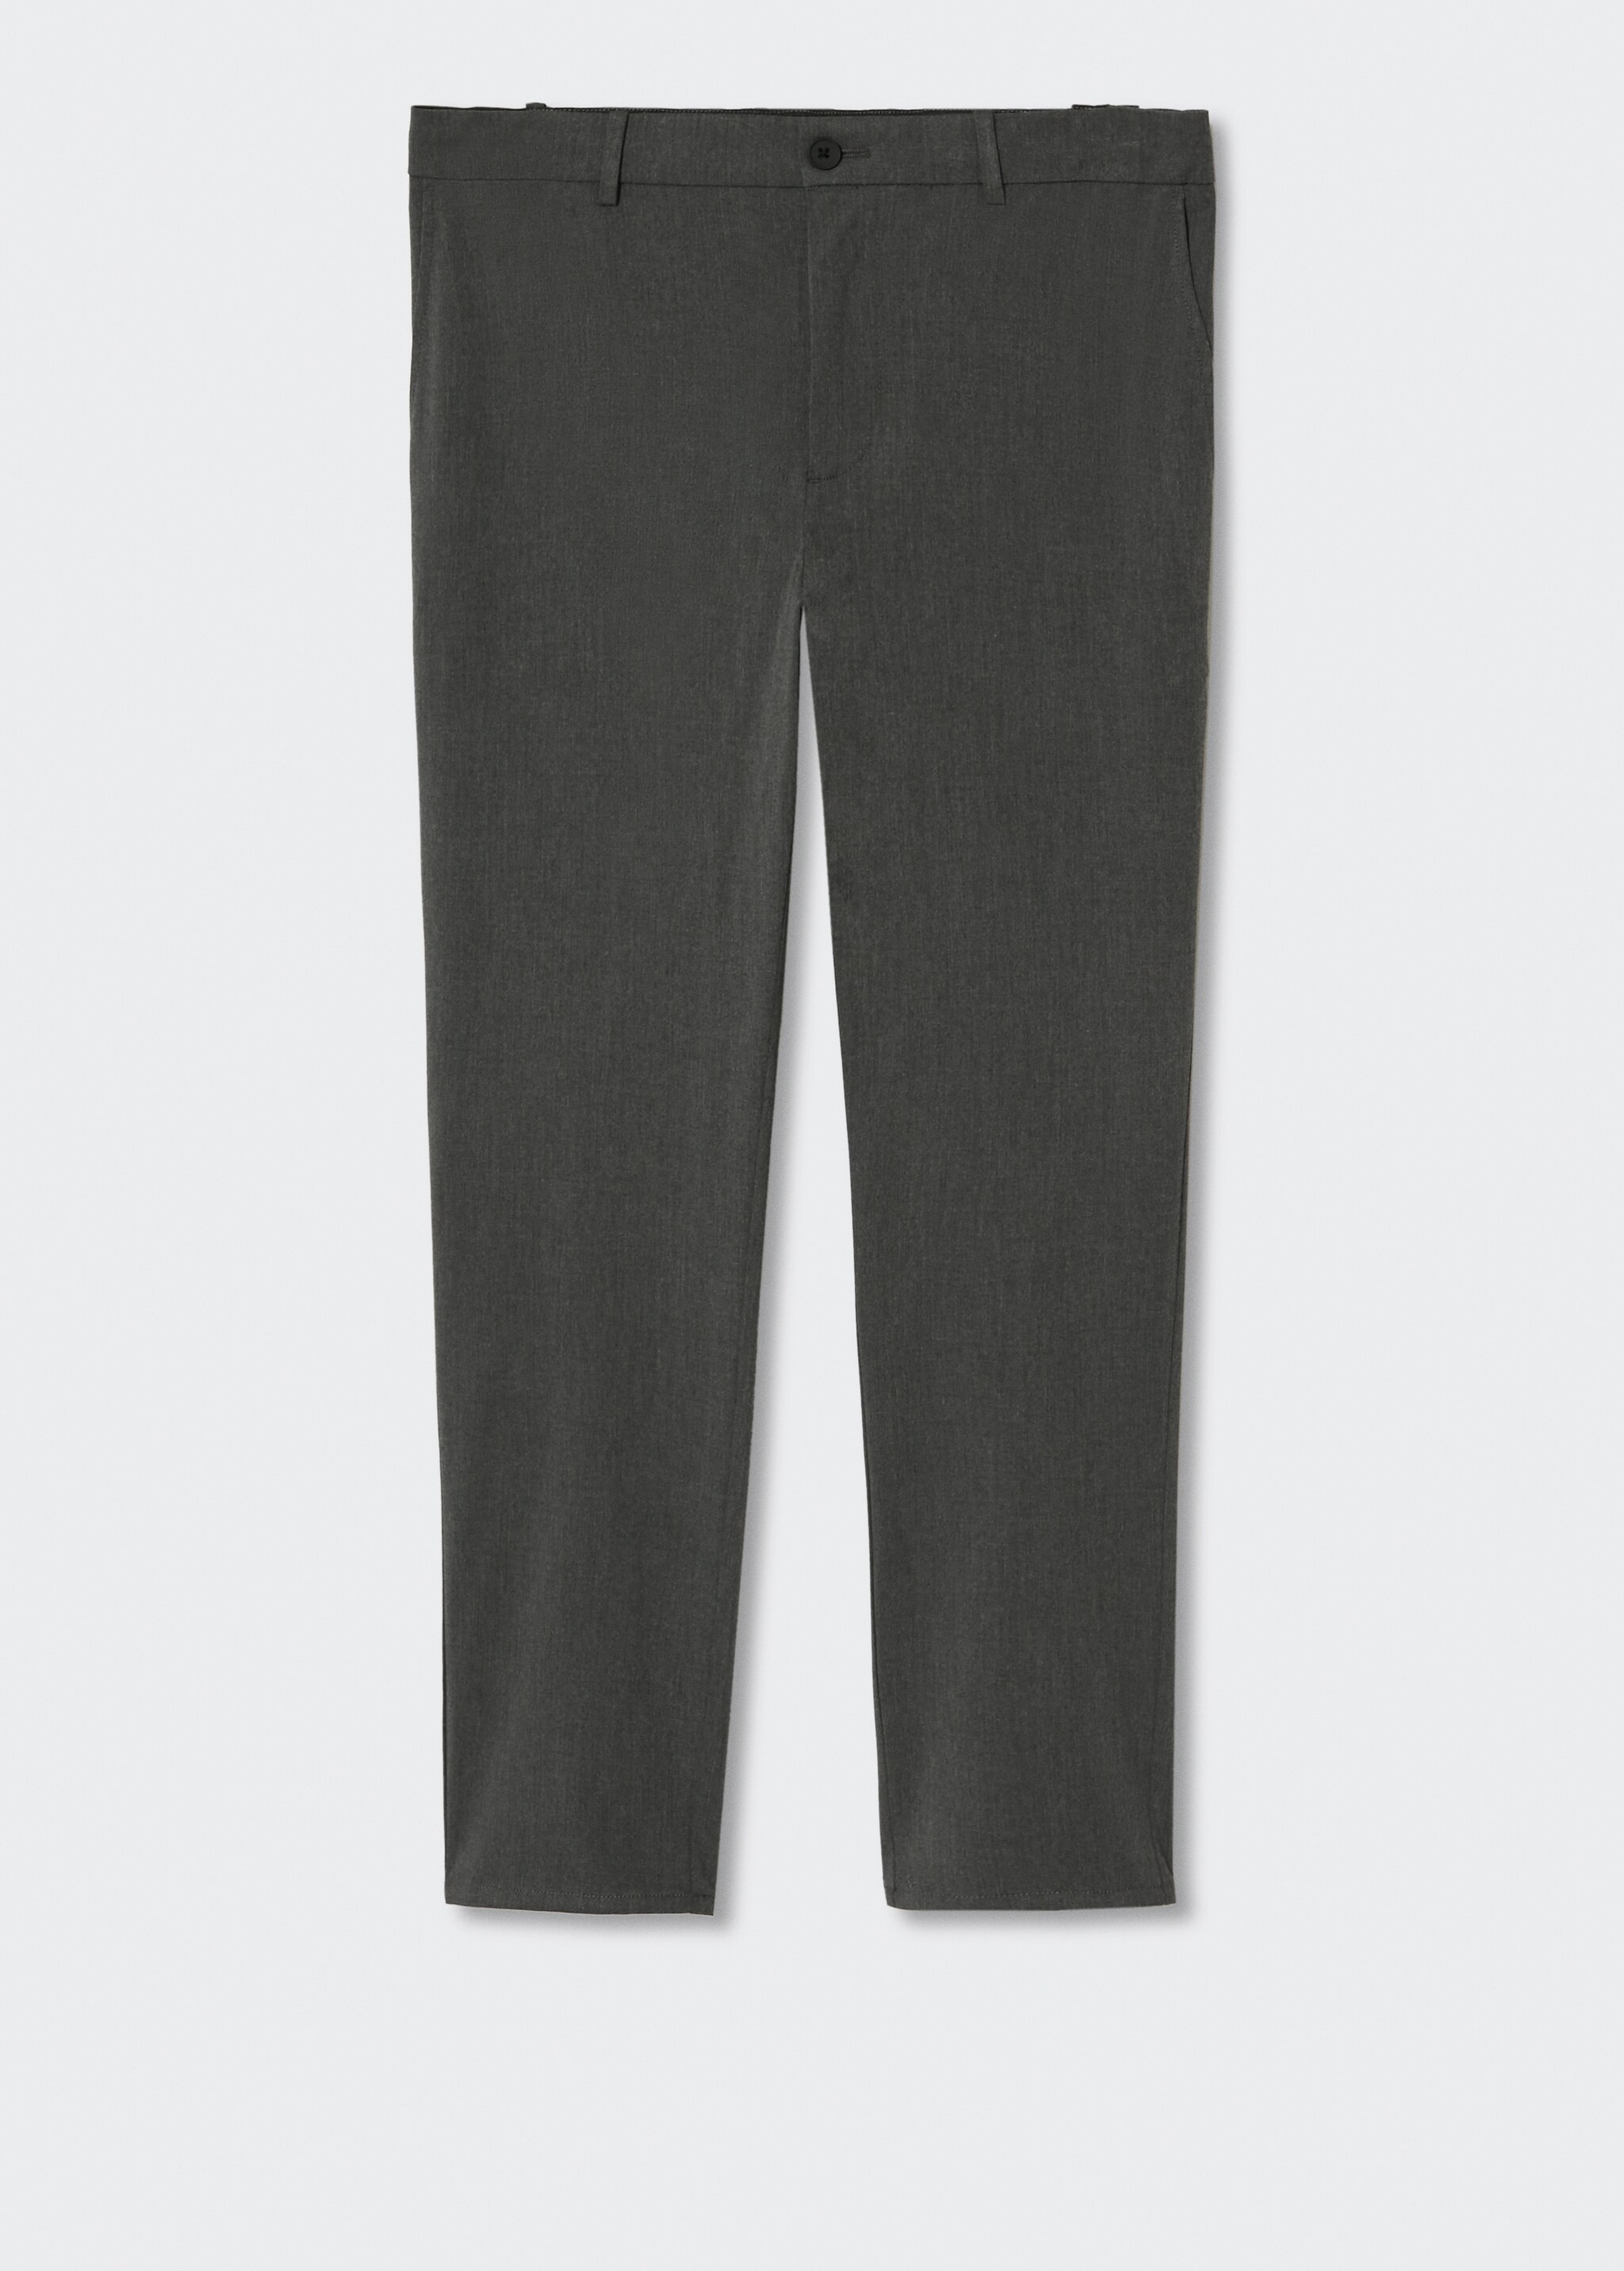 Pantalón tapered fit stretch - Artículo sin modelo